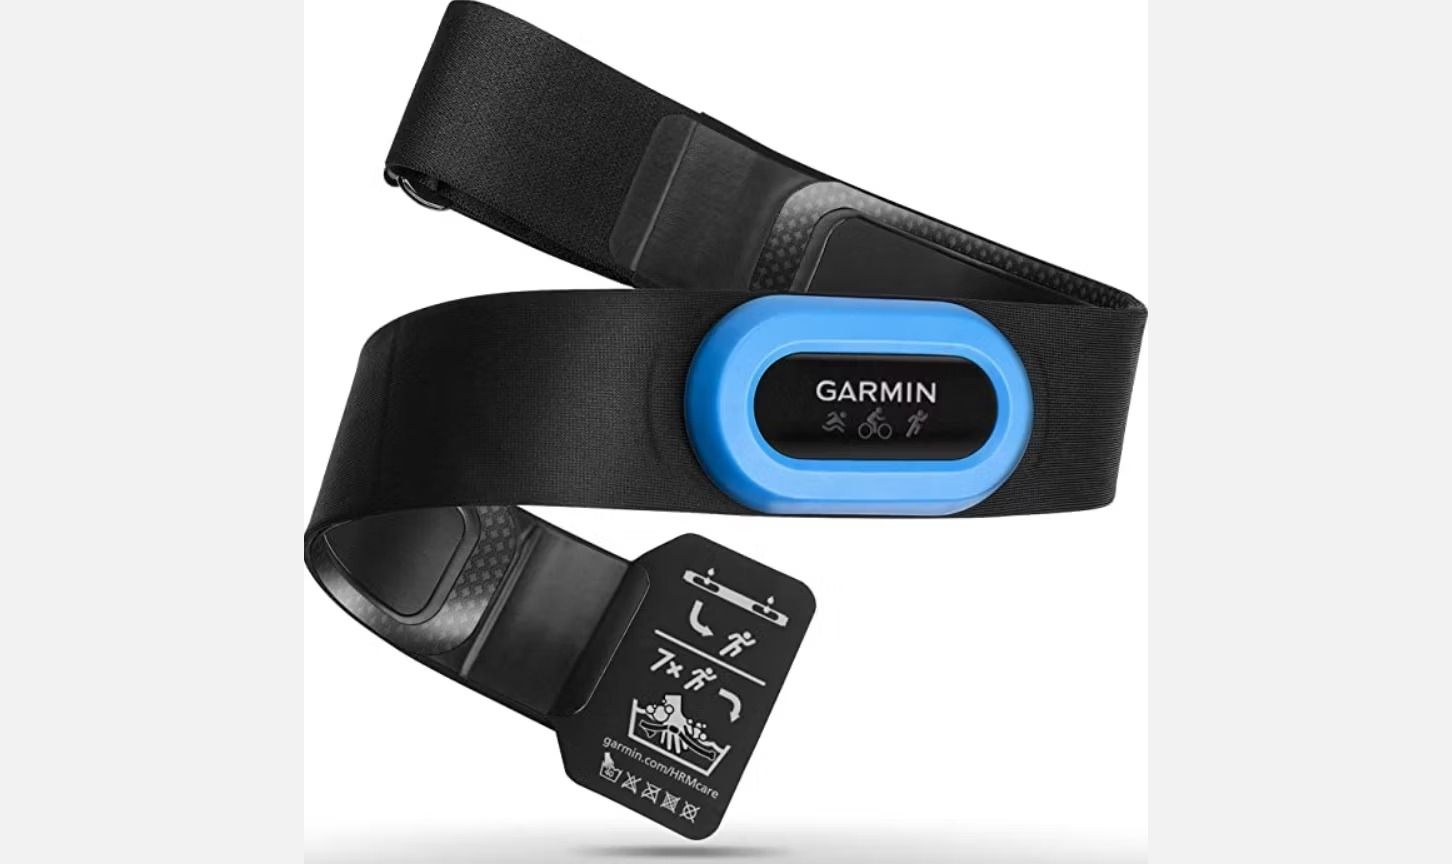 Product shot of Garmin heart rate monitor